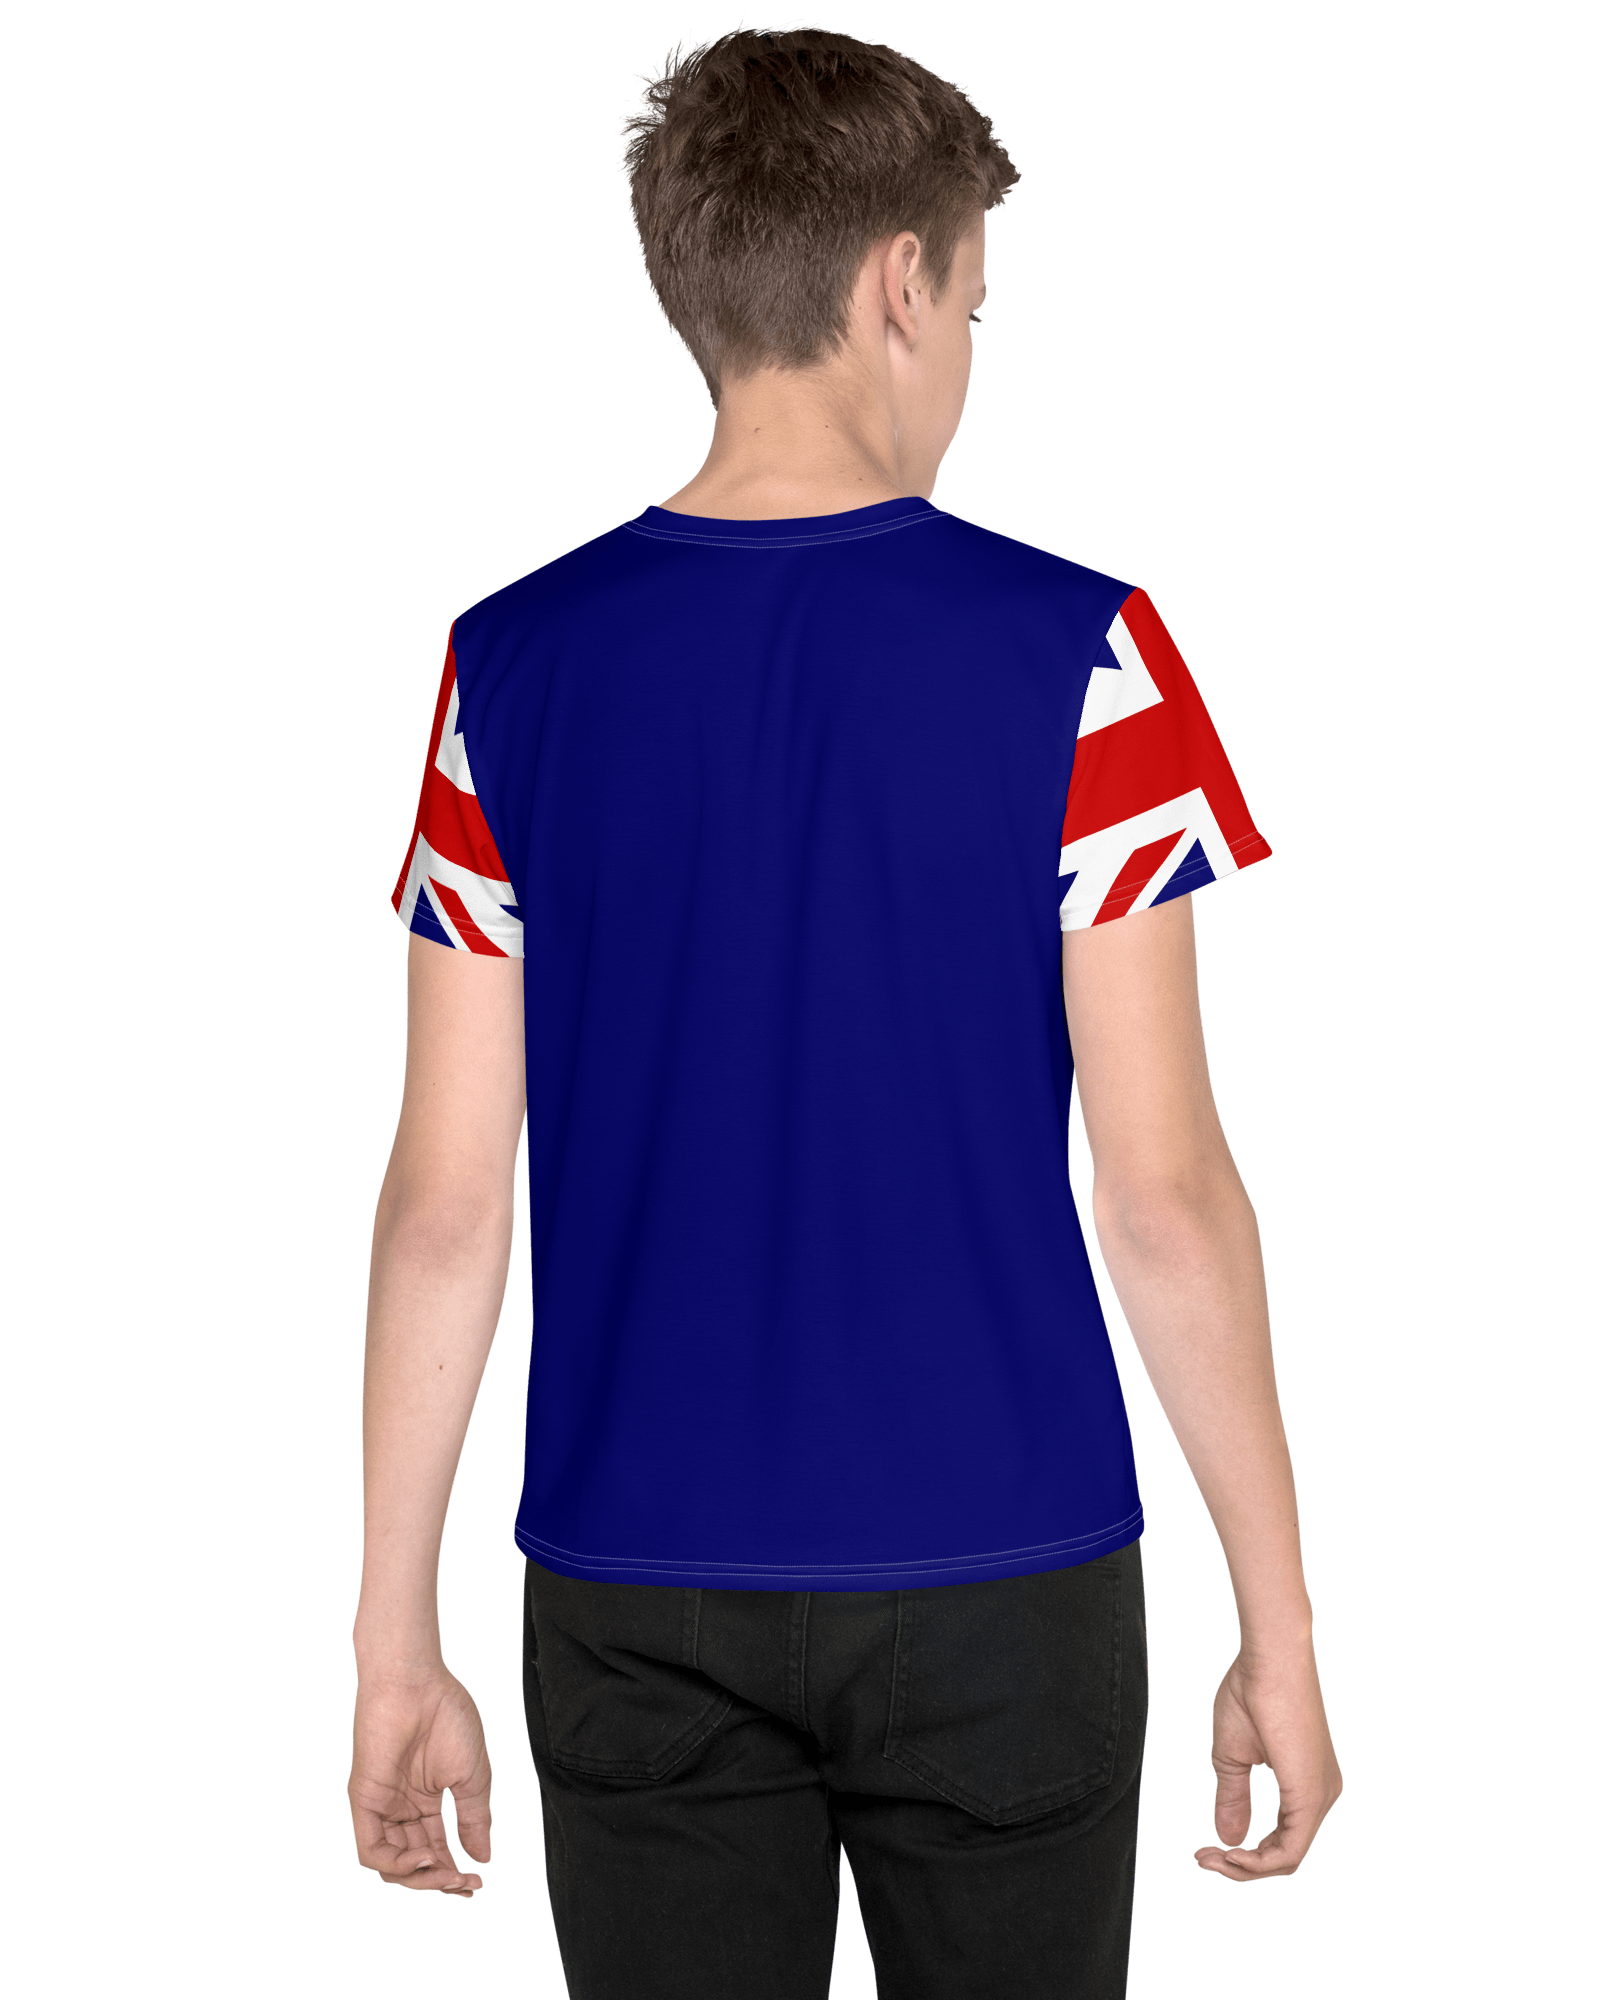 Union Jack Kids T-shirt Shirts & Tops Jolly & Goode